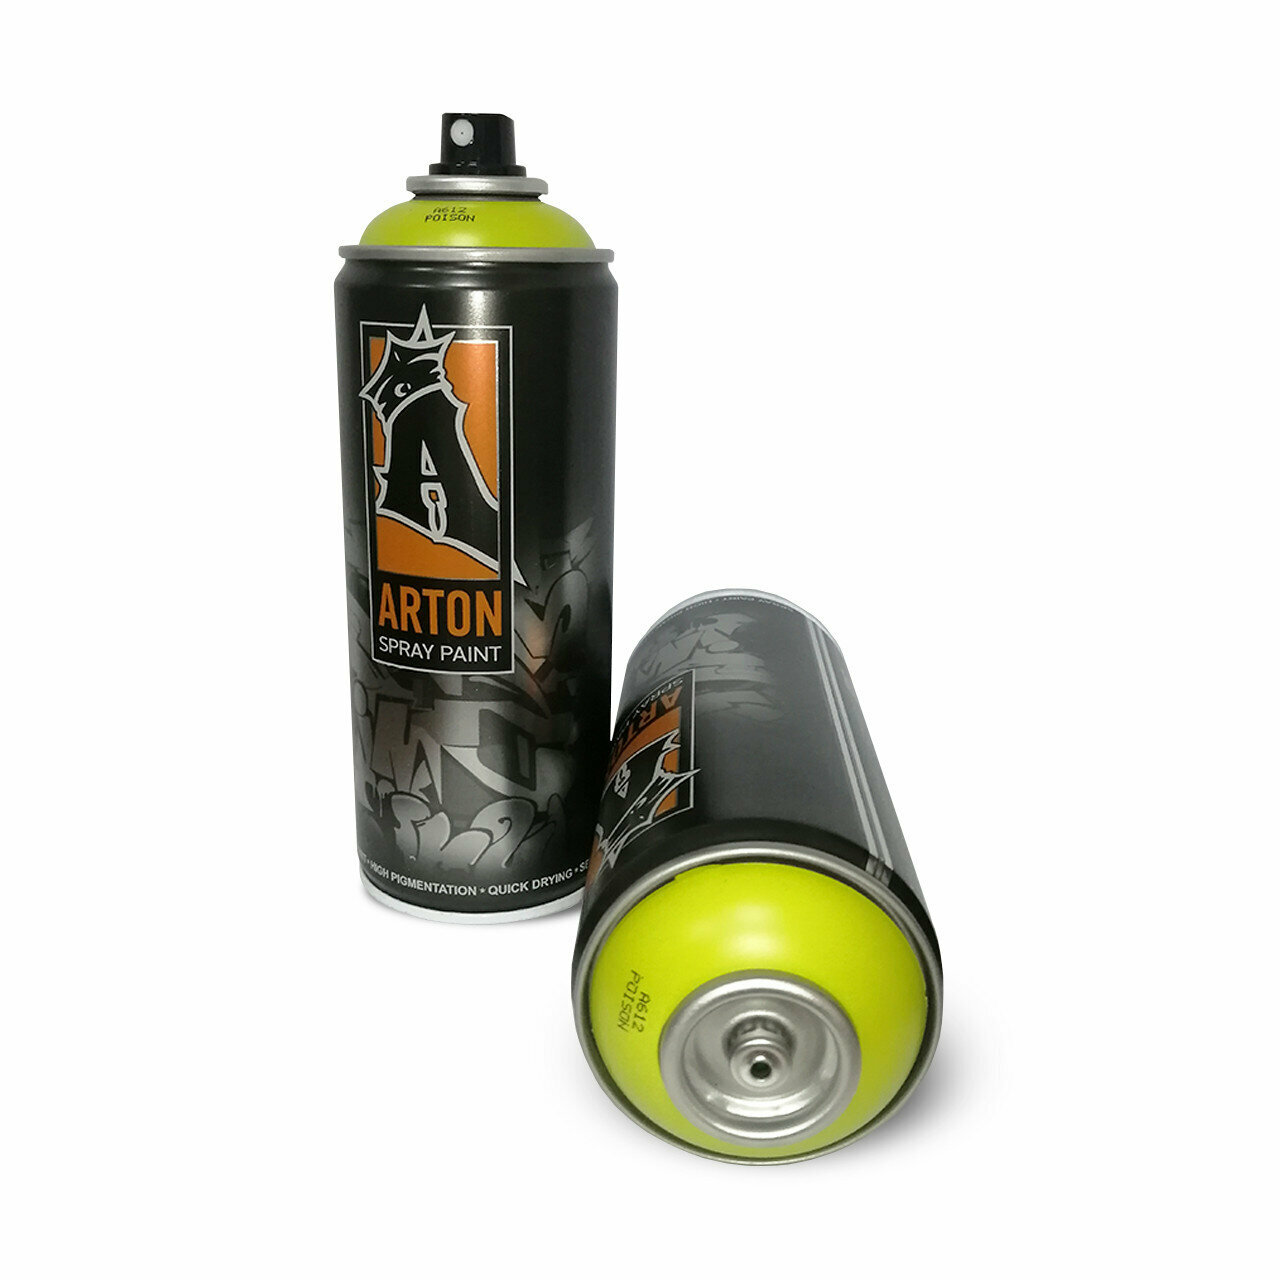 A612 Граффити "Arton" цвет Ядовитый (Poison) краска аэрозольная, 520 мл